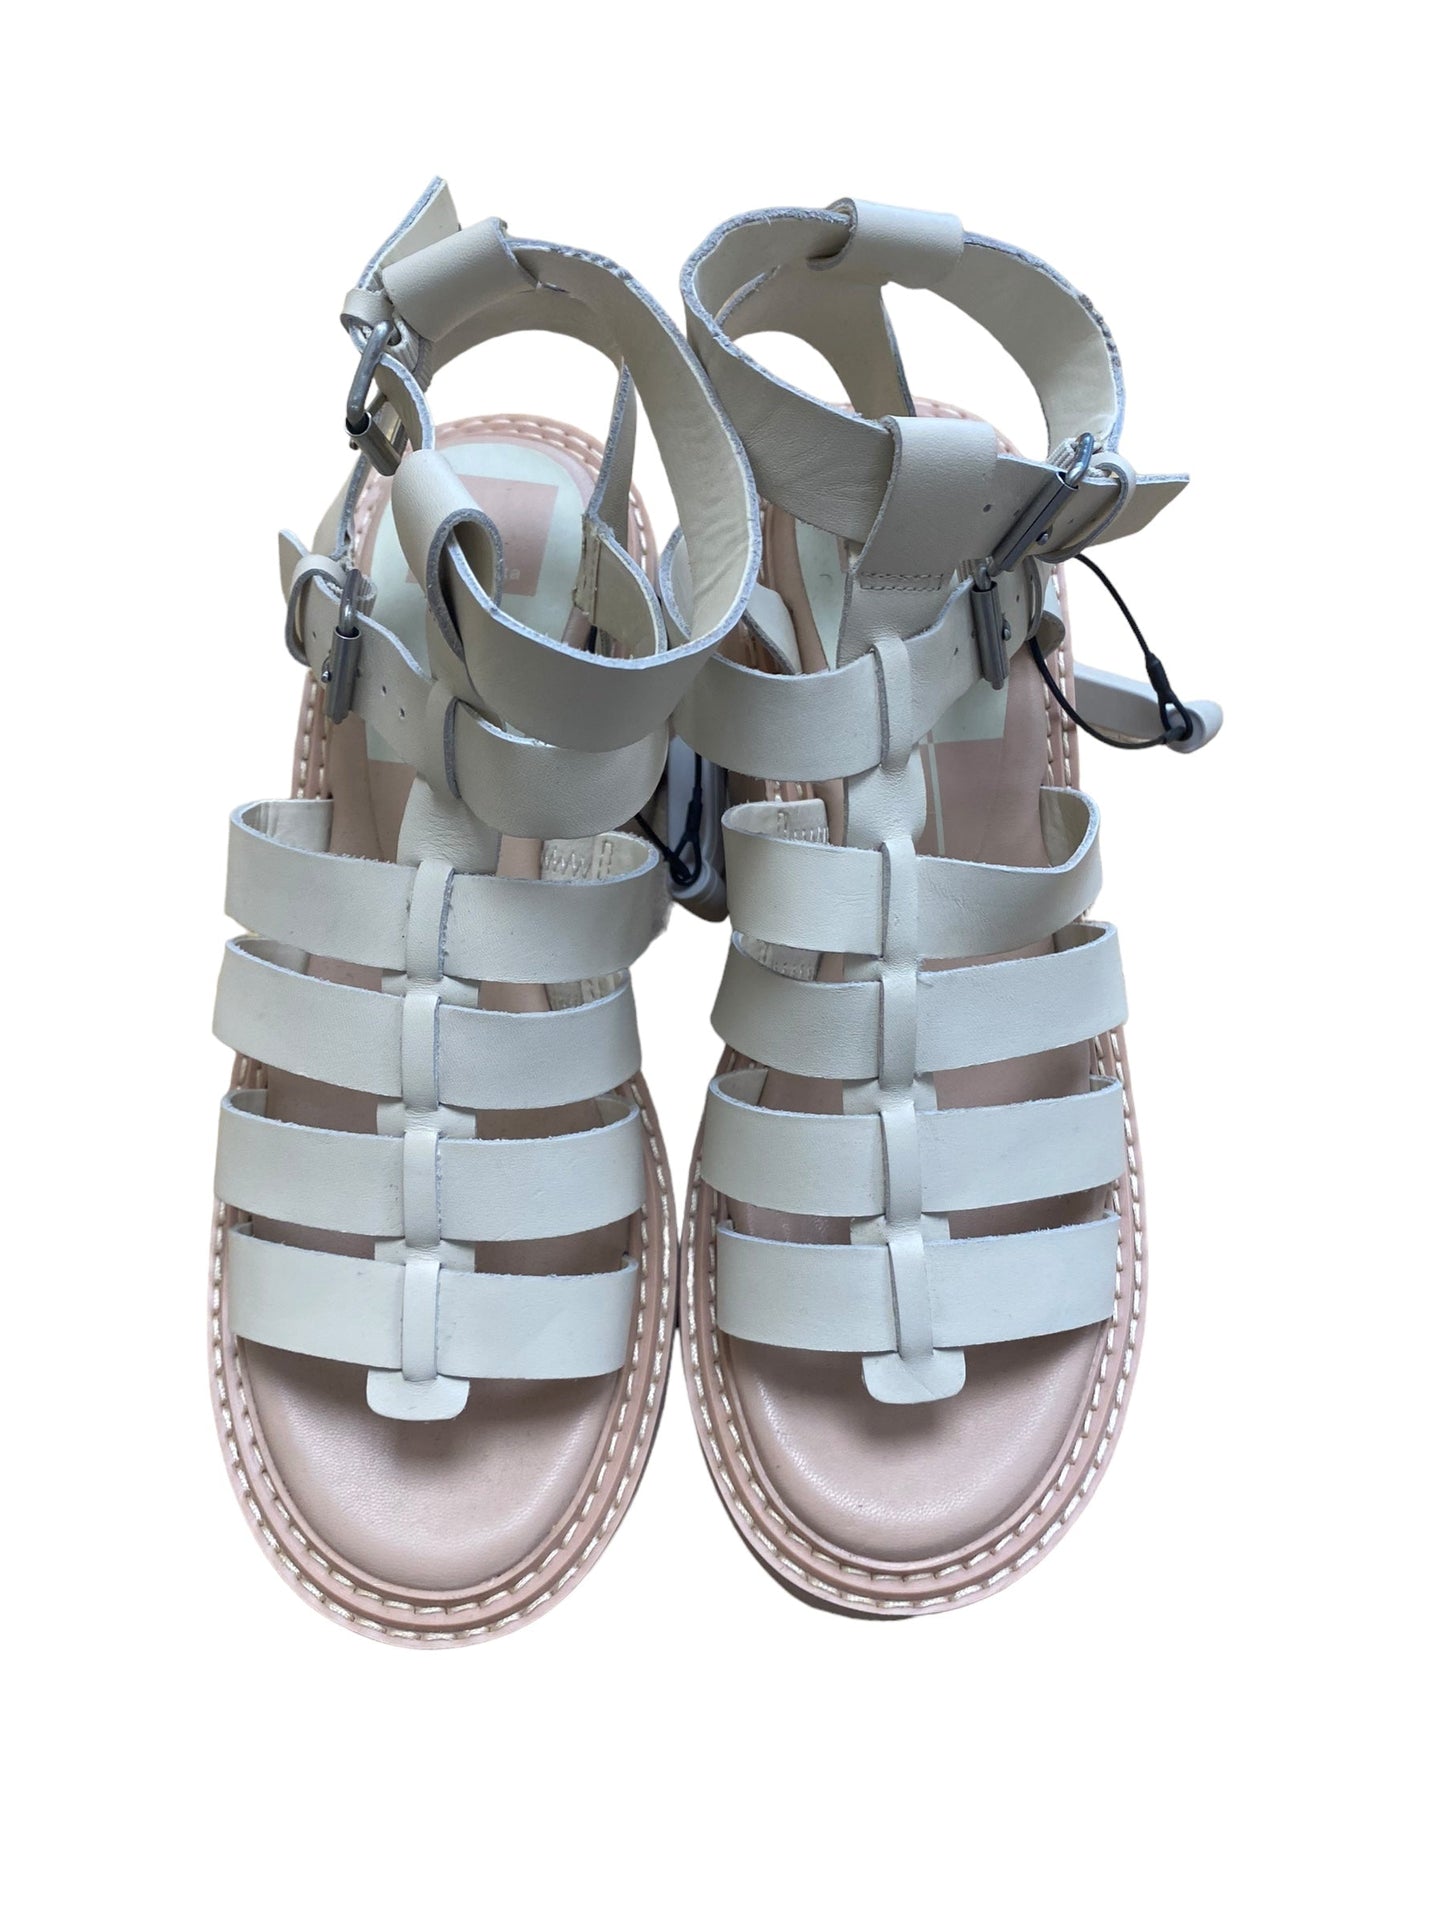 Cream Sandals Heels Block Dolce Vita, Size 9